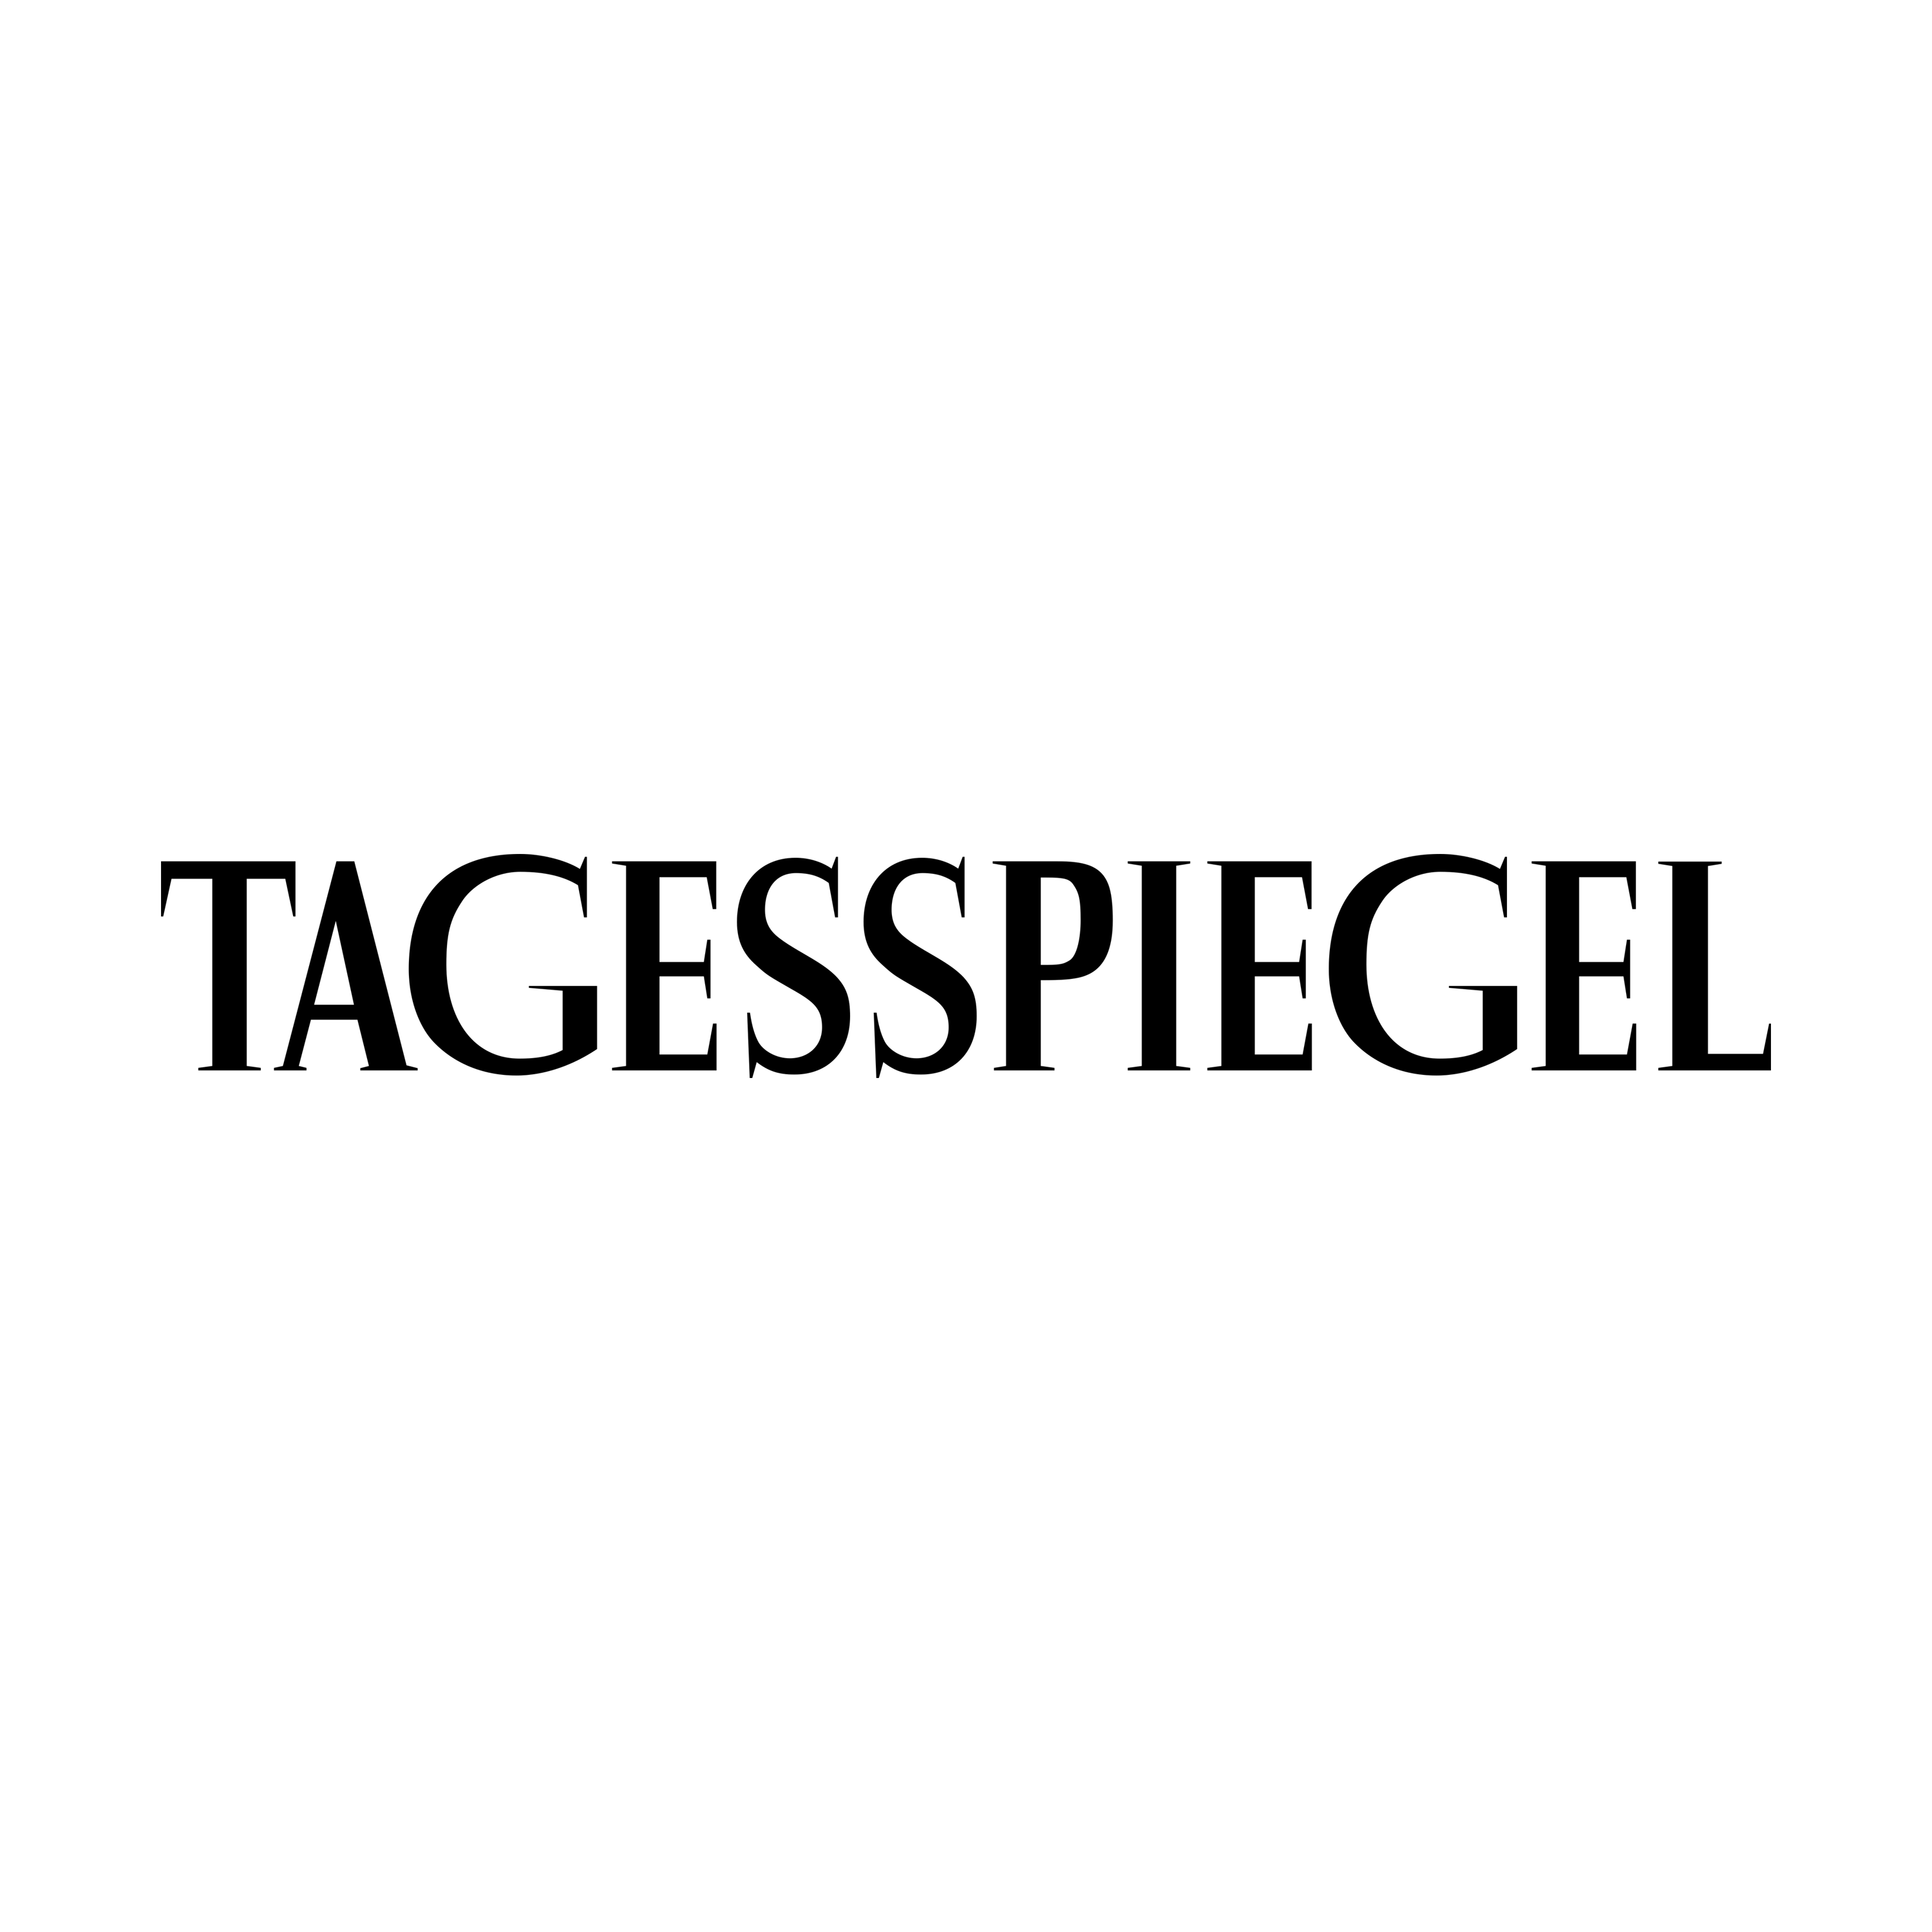 Tagesspiegel Logo 2022 Transparent Picture